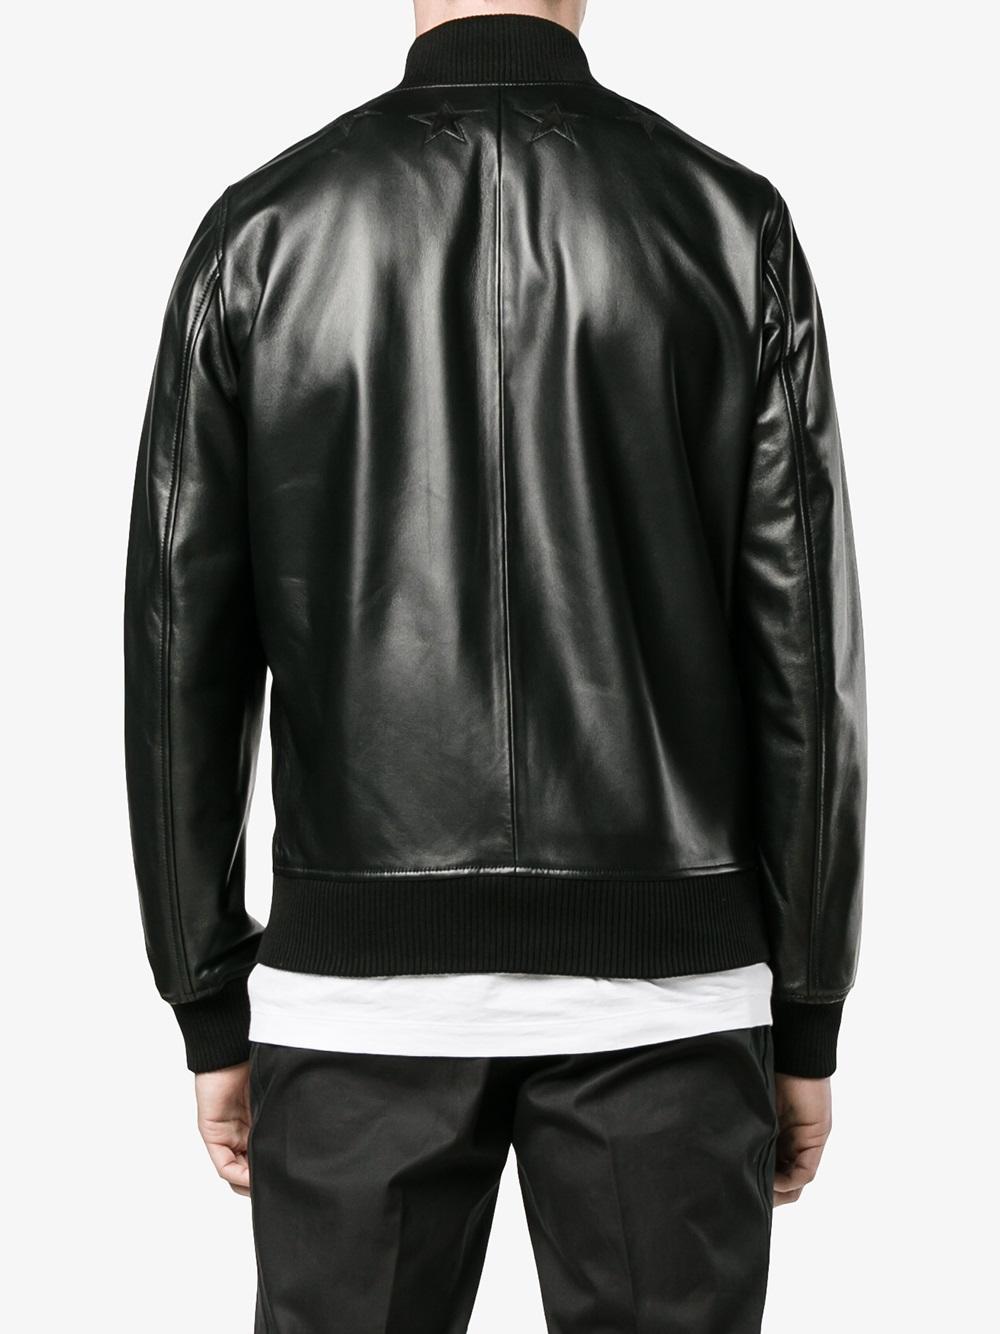 Givenchy Star Logo Bomber Jacket in Black for Men - Lyst